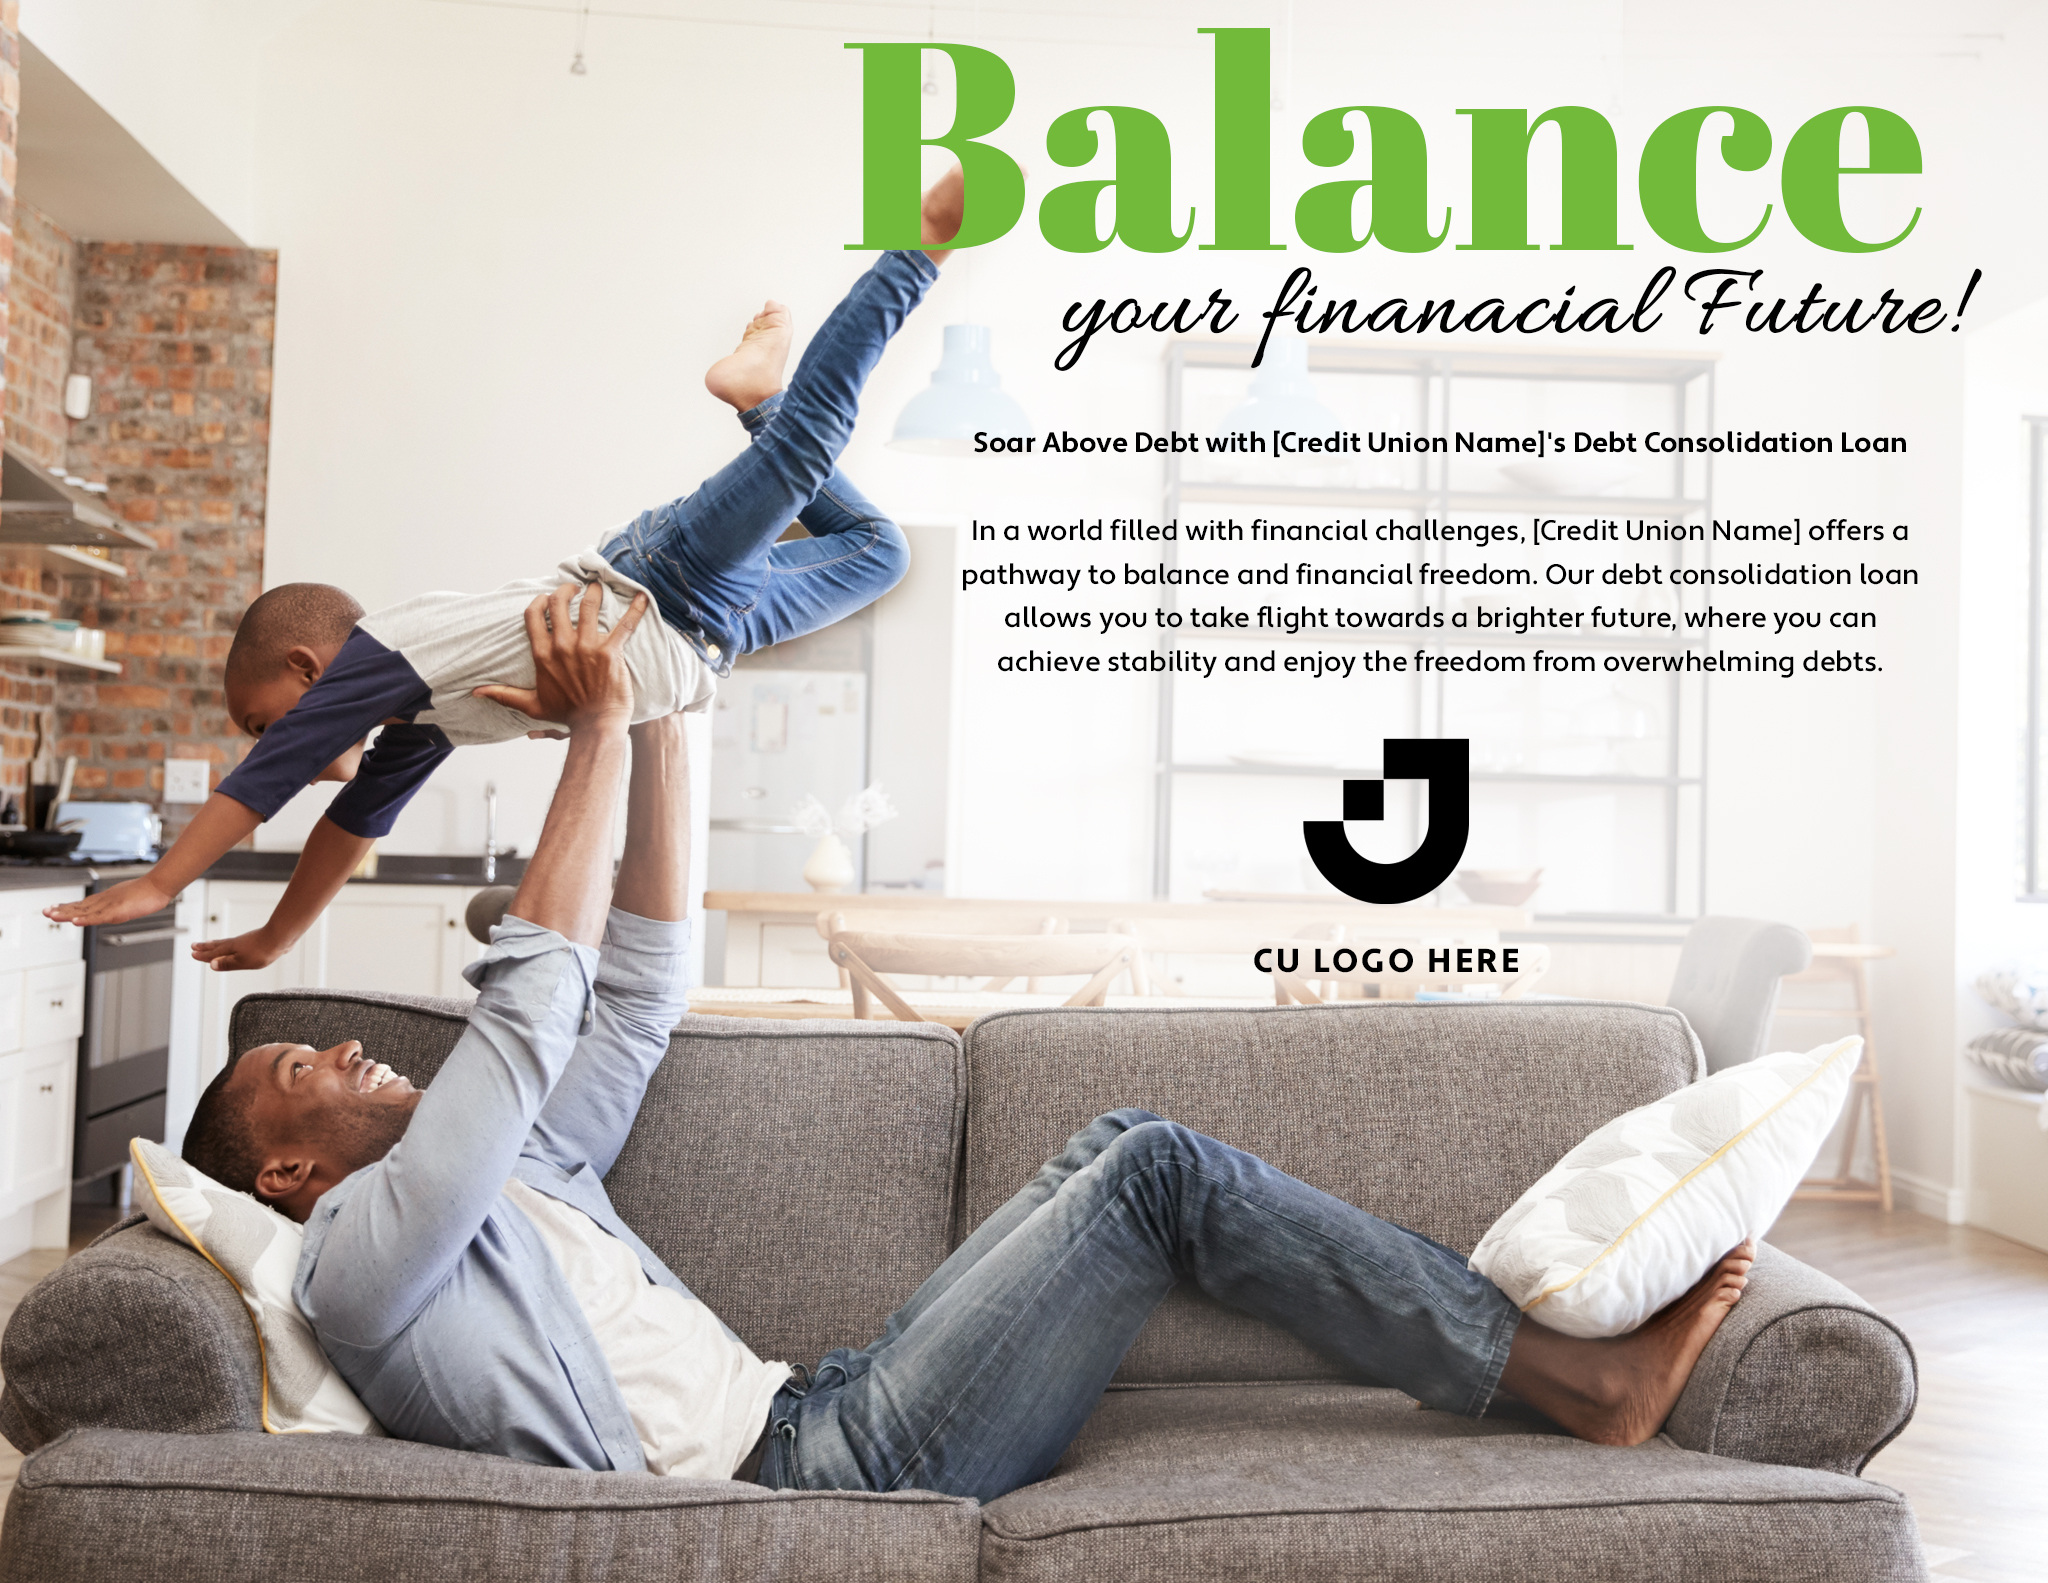 Balance Your Financial Future